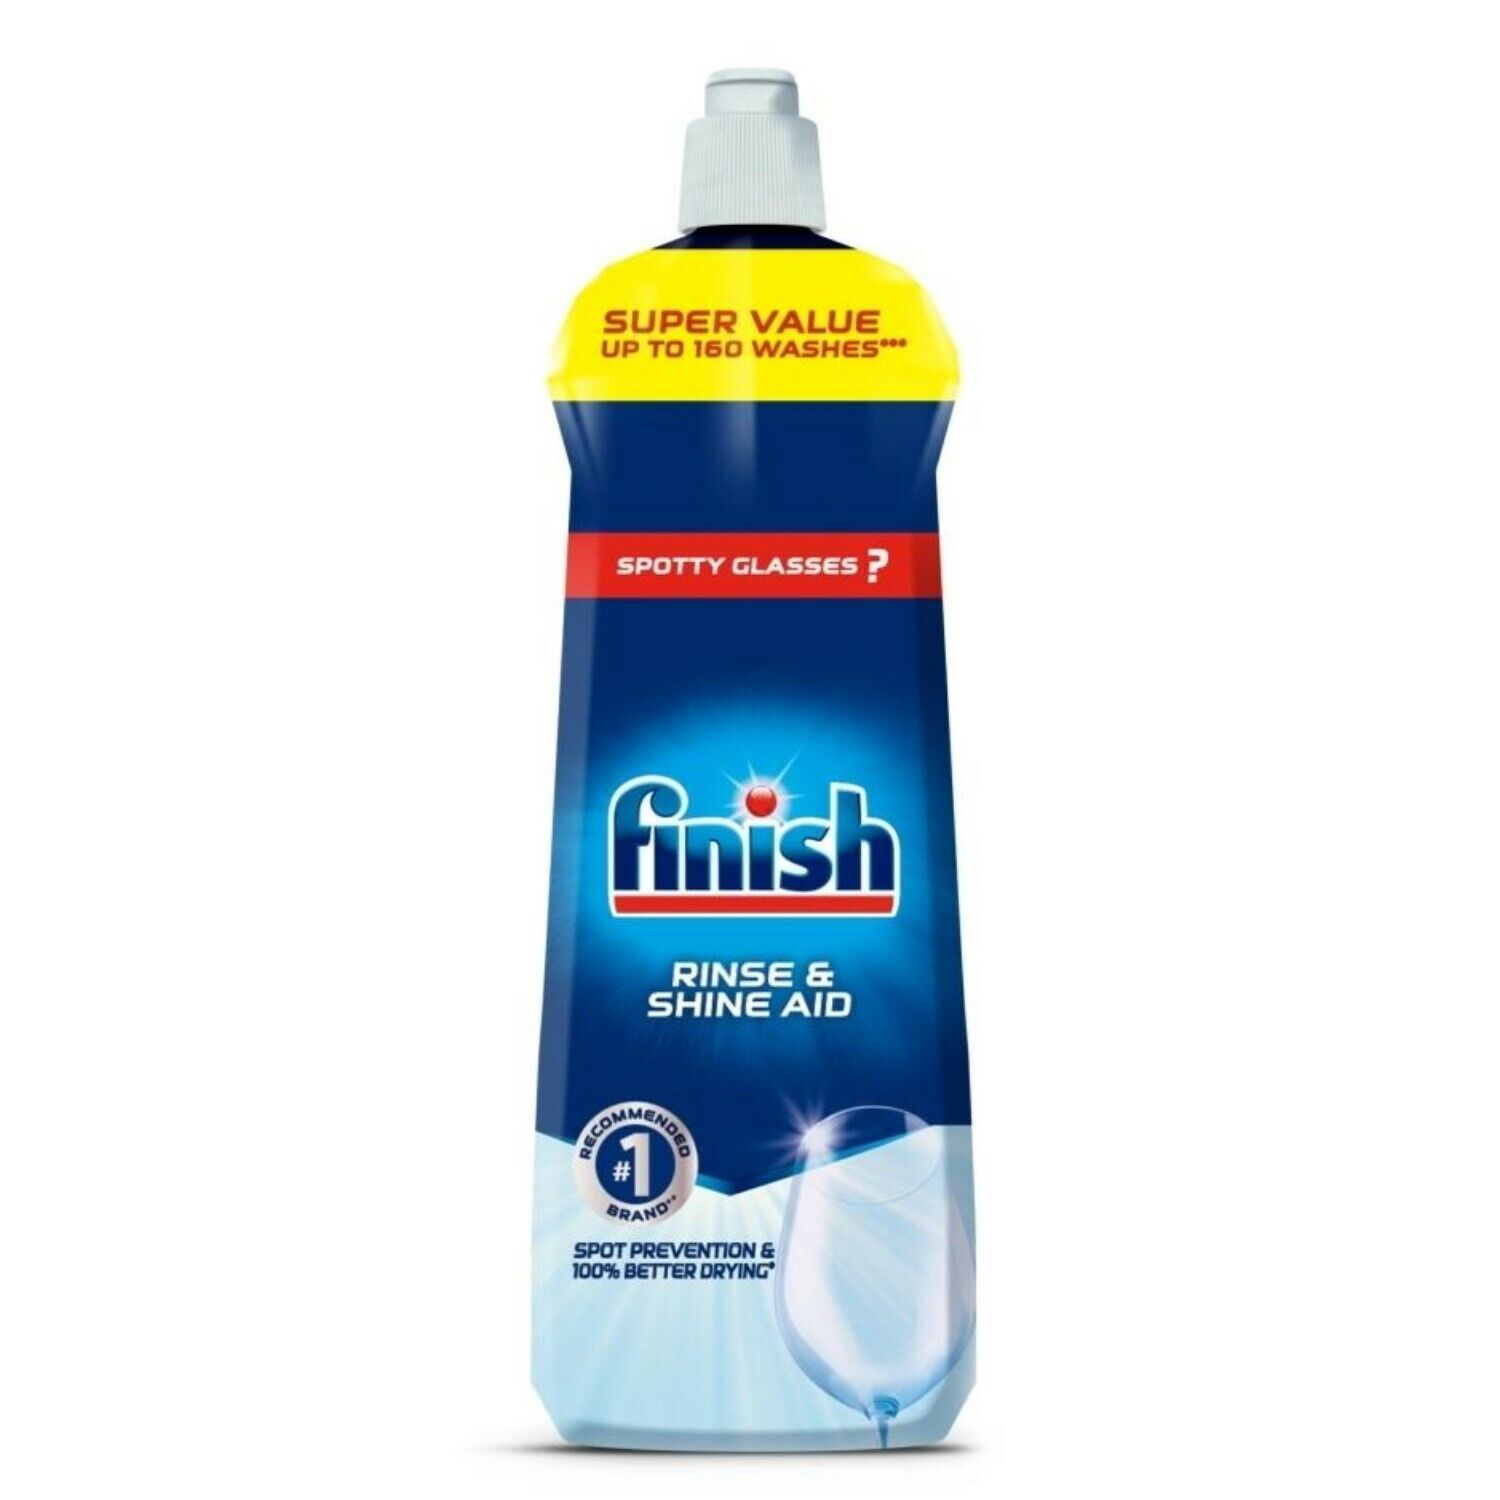 Finish Rinse Aid Liquid Dishwasher Cleaner Shinier & Drier Dishes 800ml- 2926